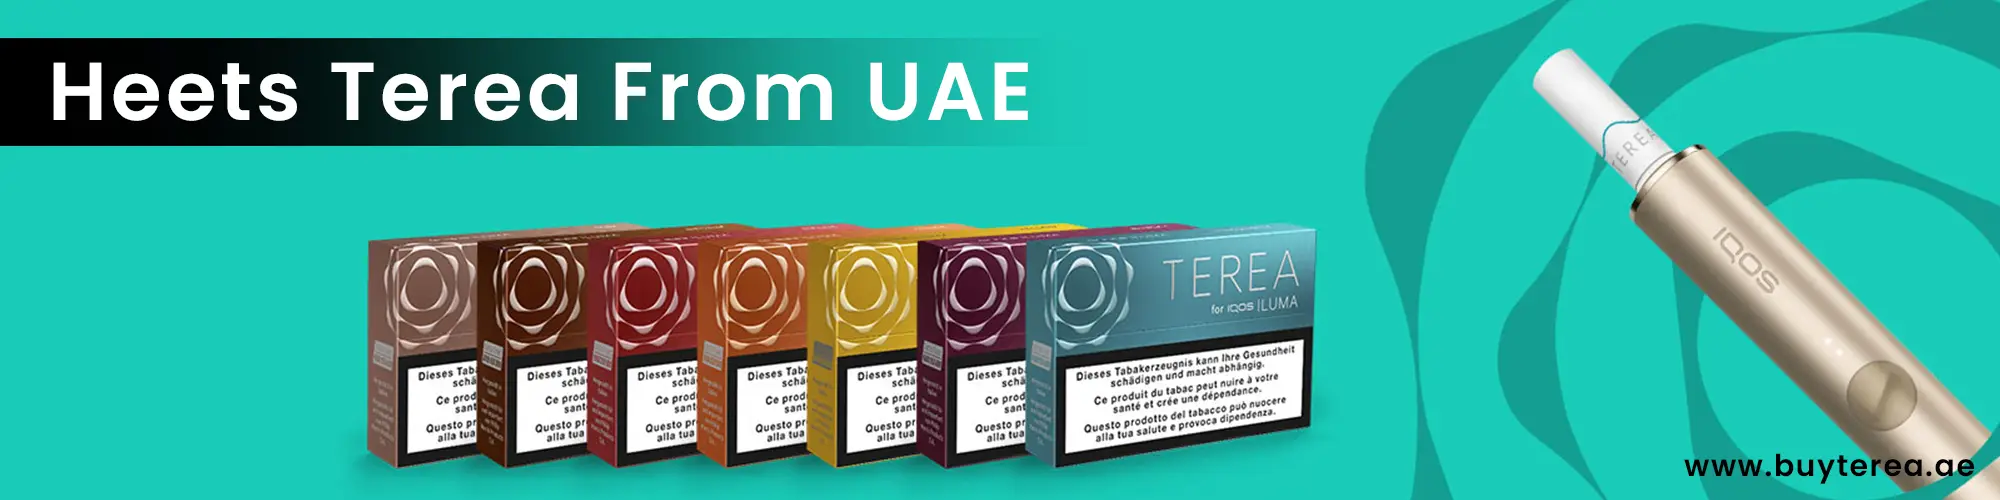 Heets Terea From UAE For IQOS ILUMA